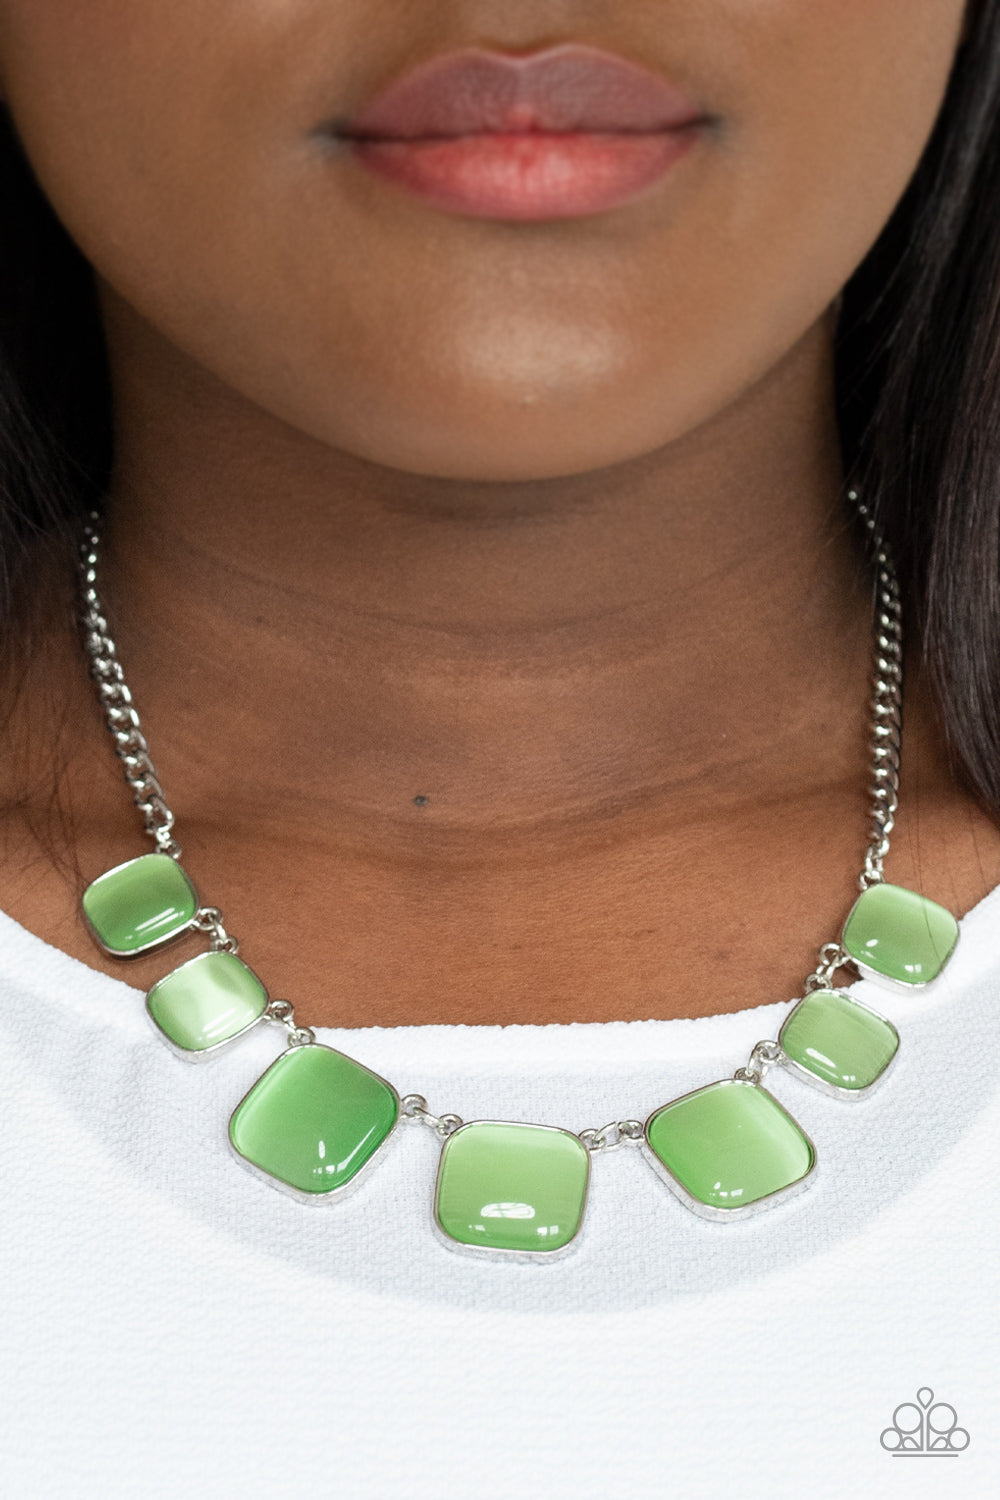 Paparazzi Accessories - Aura Allure #N689 - Green Necklace